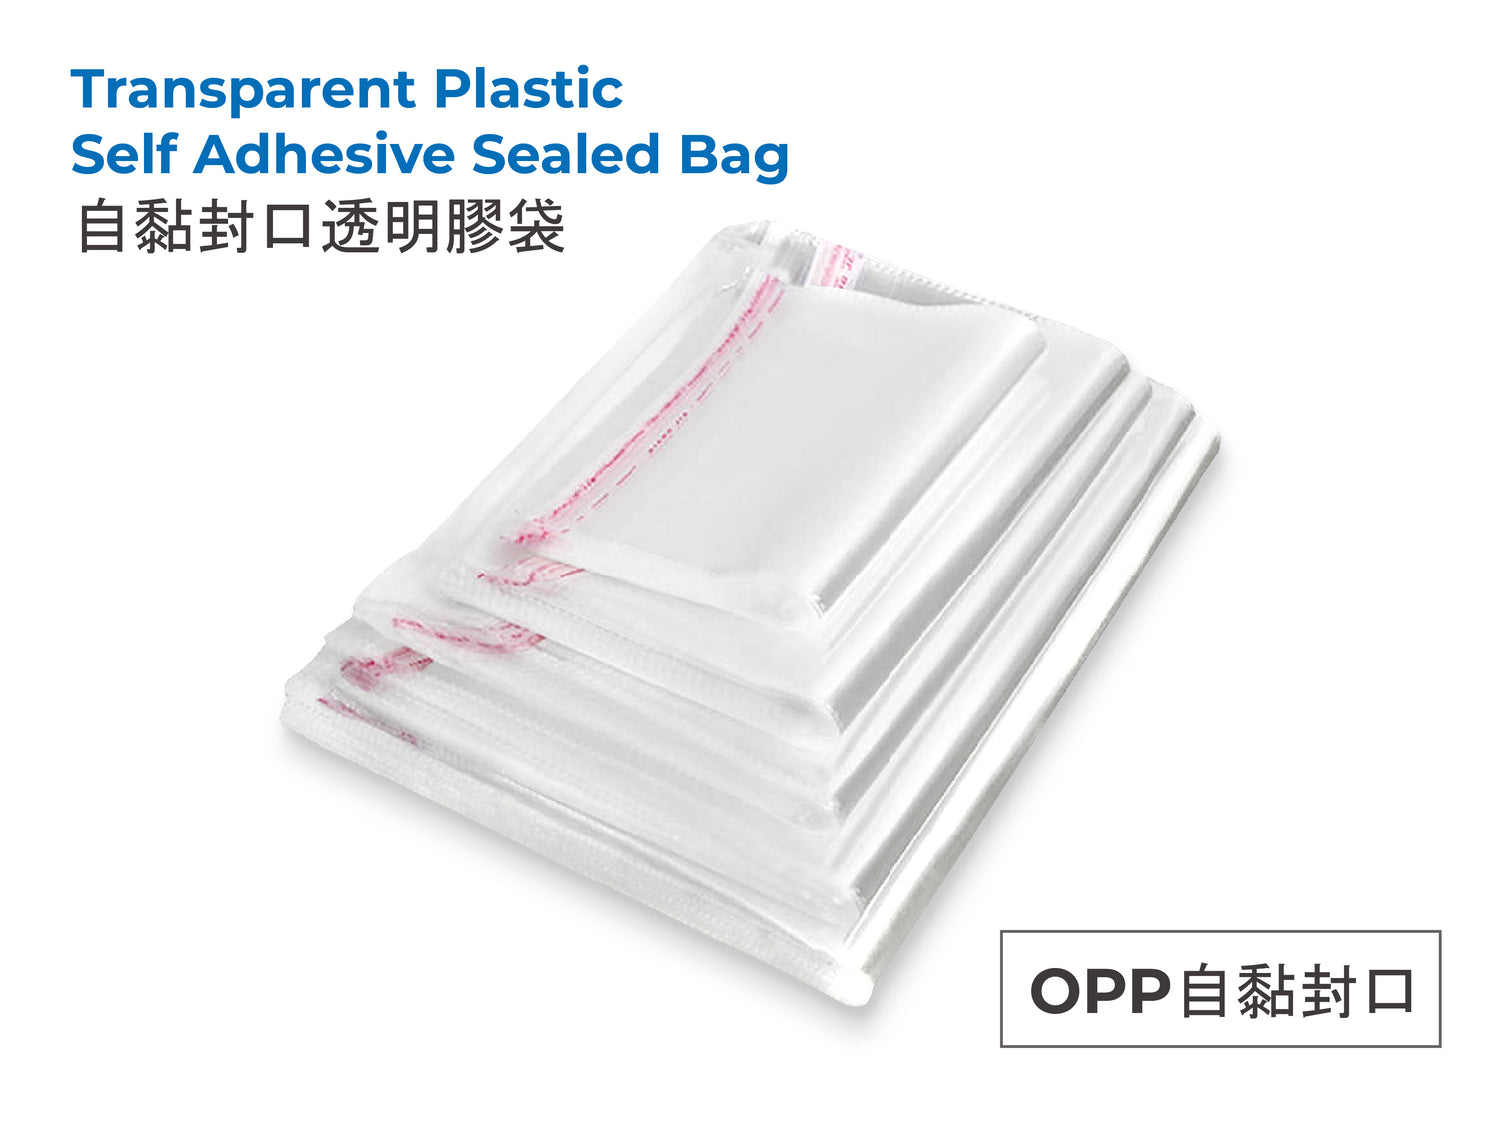 Transparent Plastic Self Adhesive Sealed Bag OPP自黏封口透明膠袋